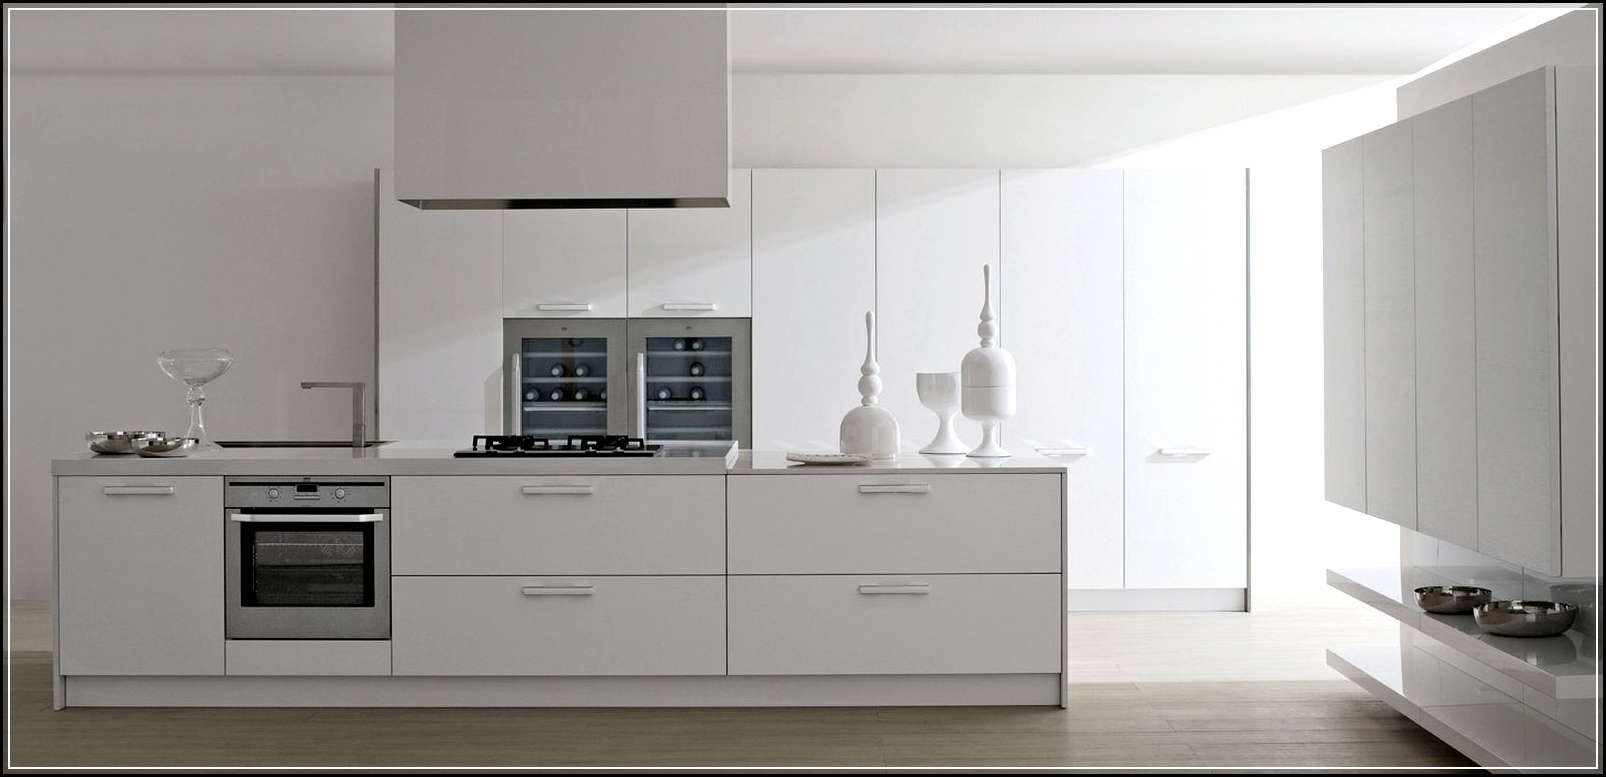 White Contemporary Kitchen Cabinets
 White Modern Kitchen Cabinets Ideas to Add